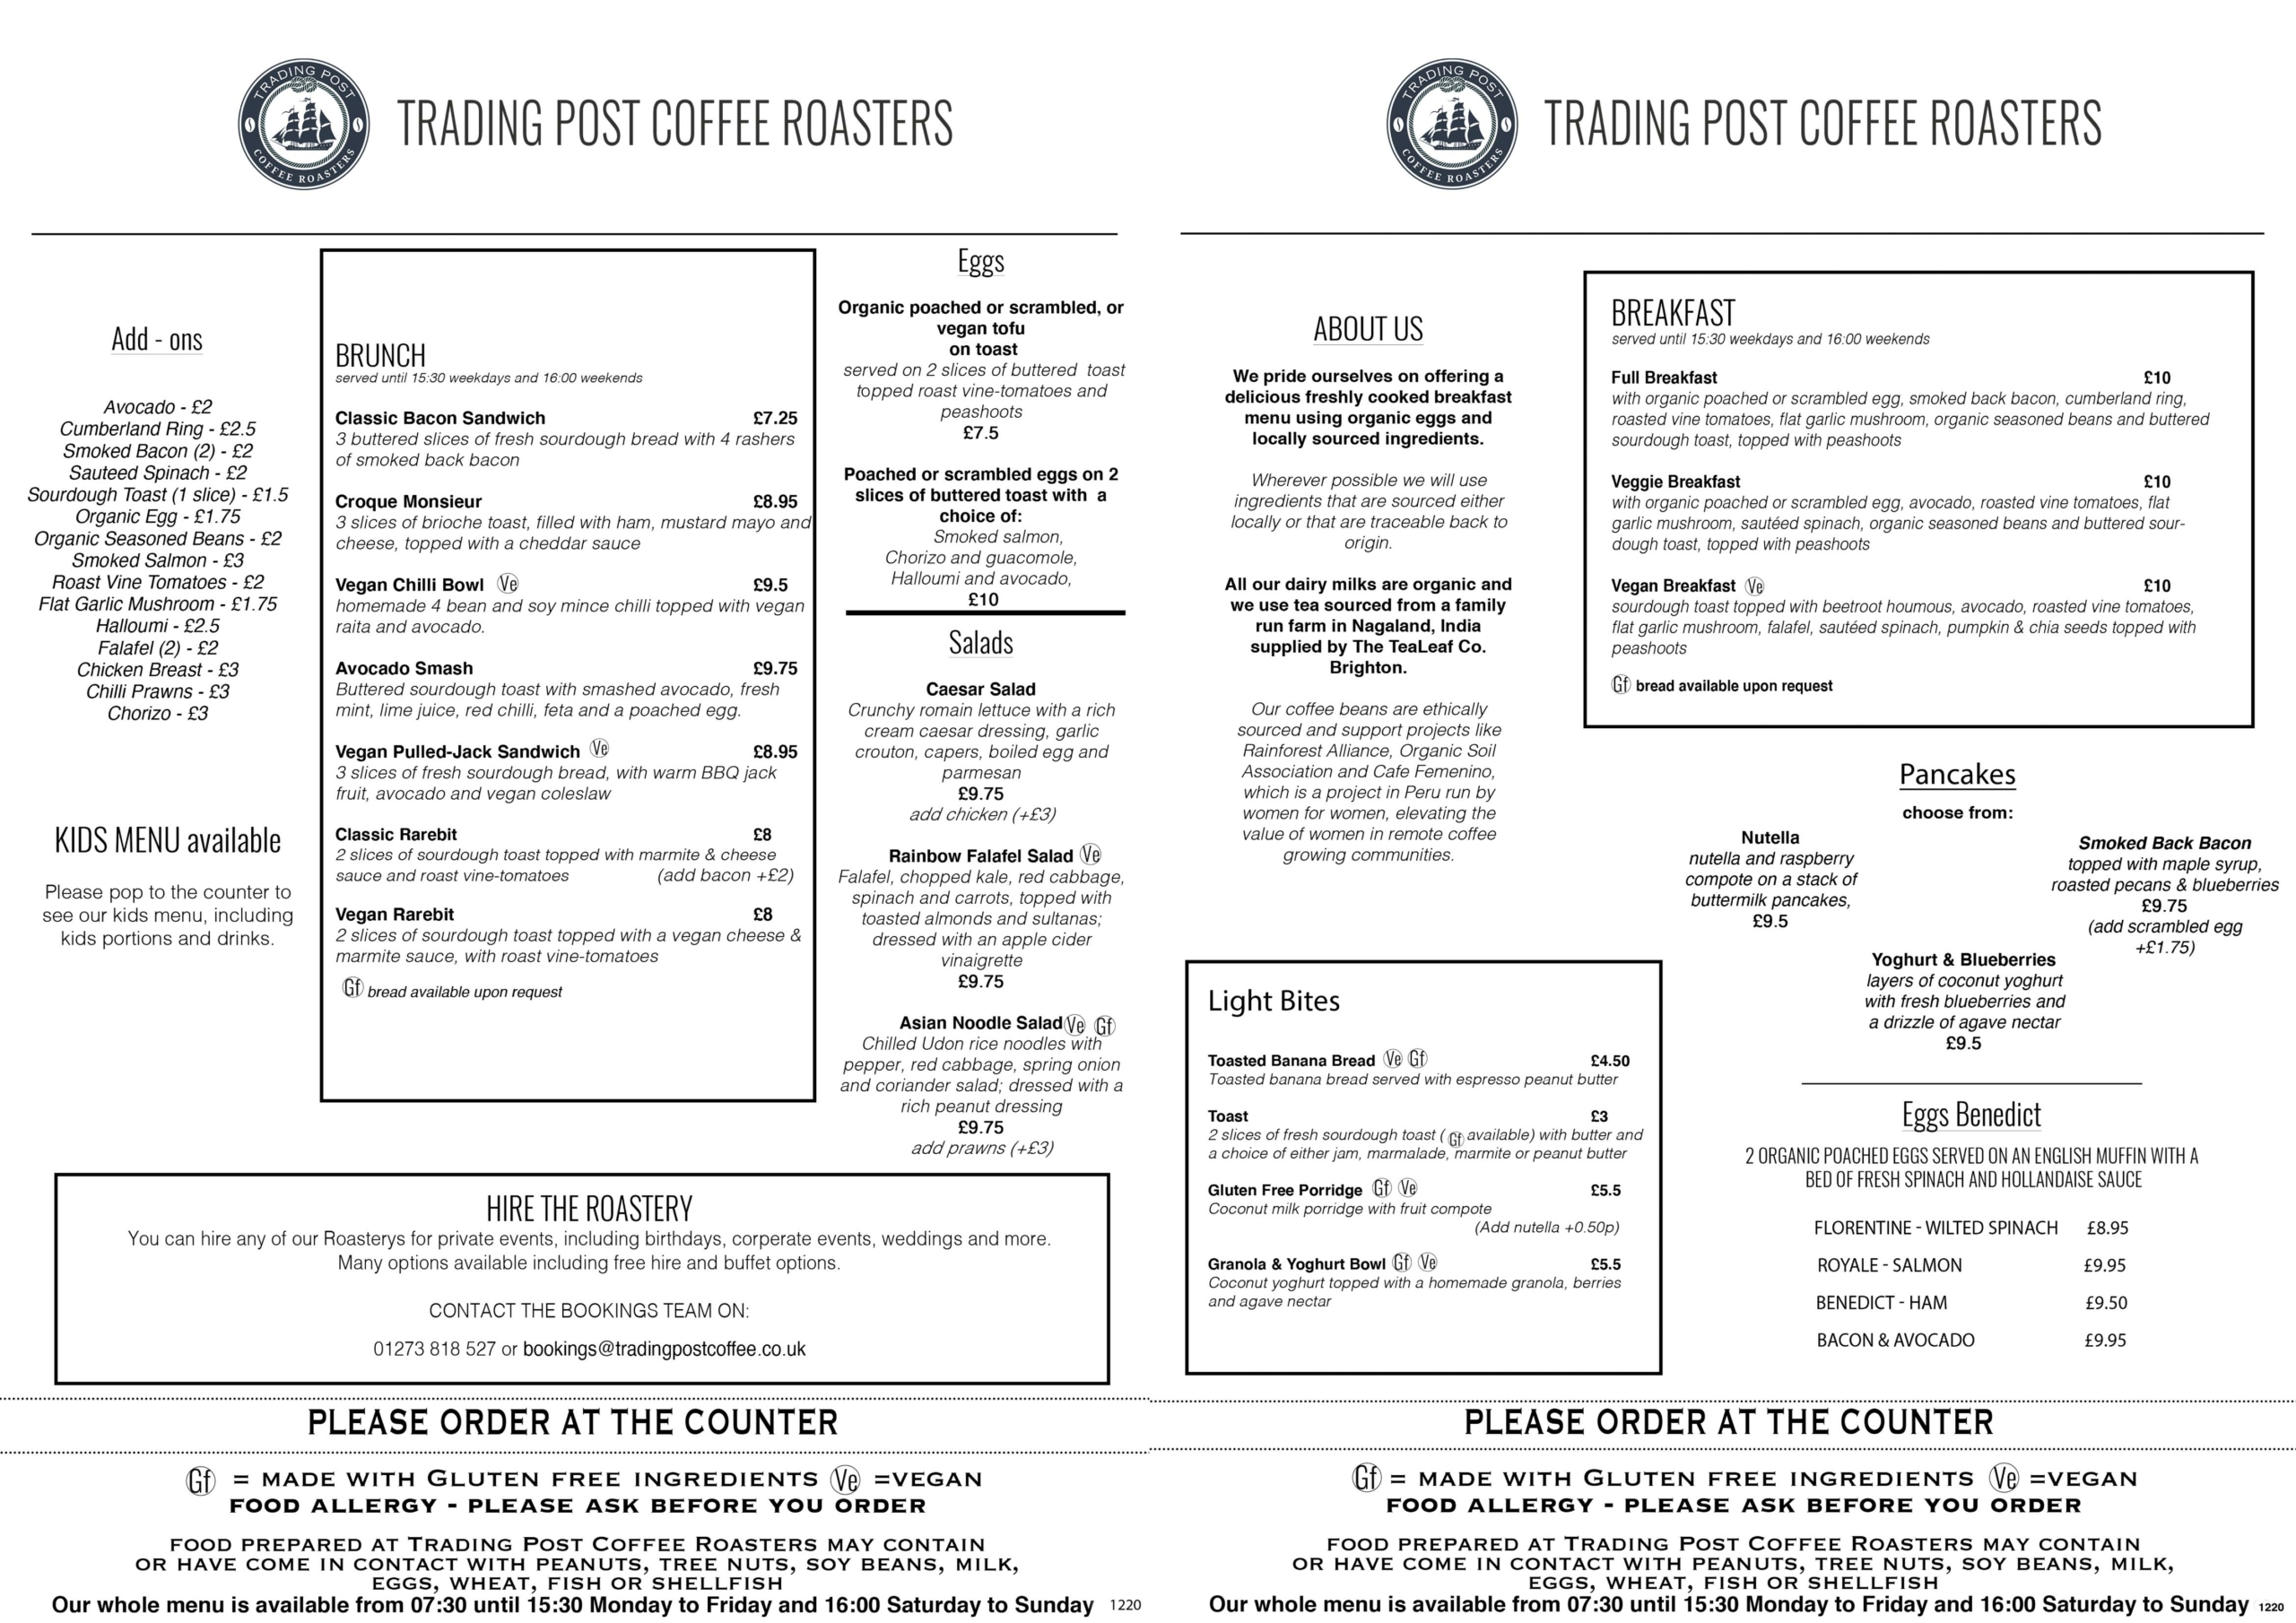 Trading Post Coffee Roasters Brighton - main menu